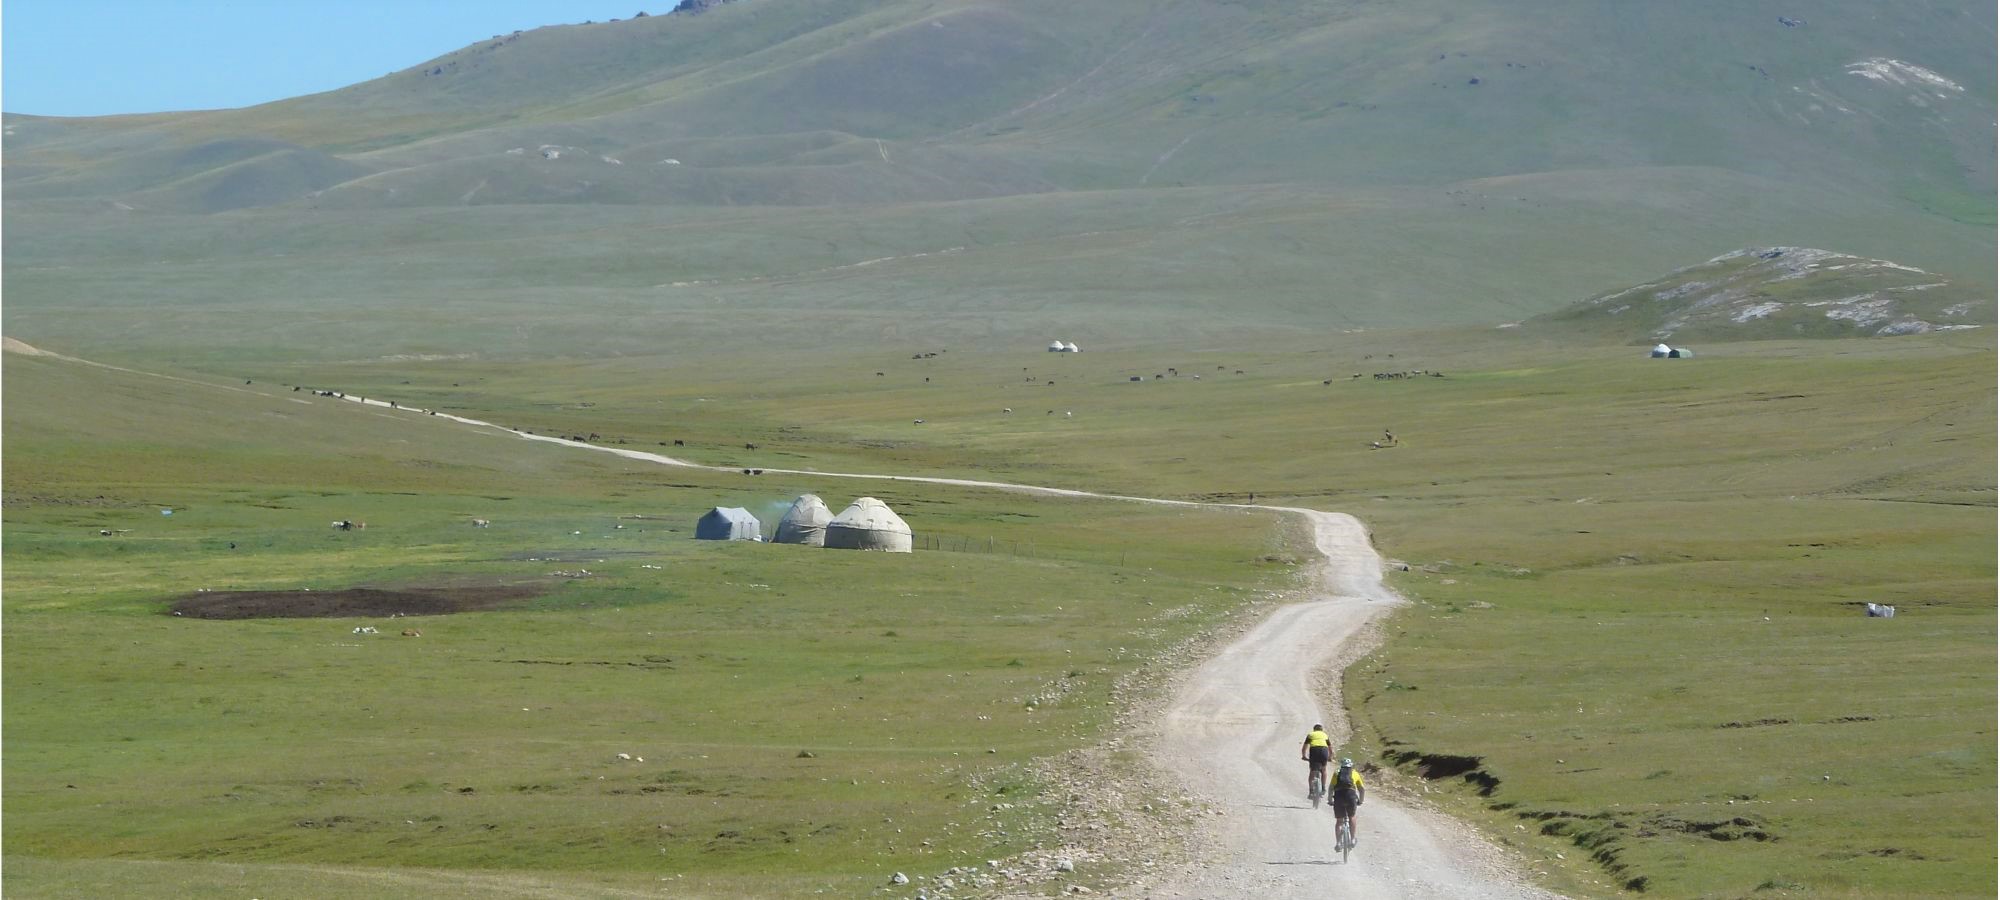 Mountain bike Holidays Kyrgyzstan